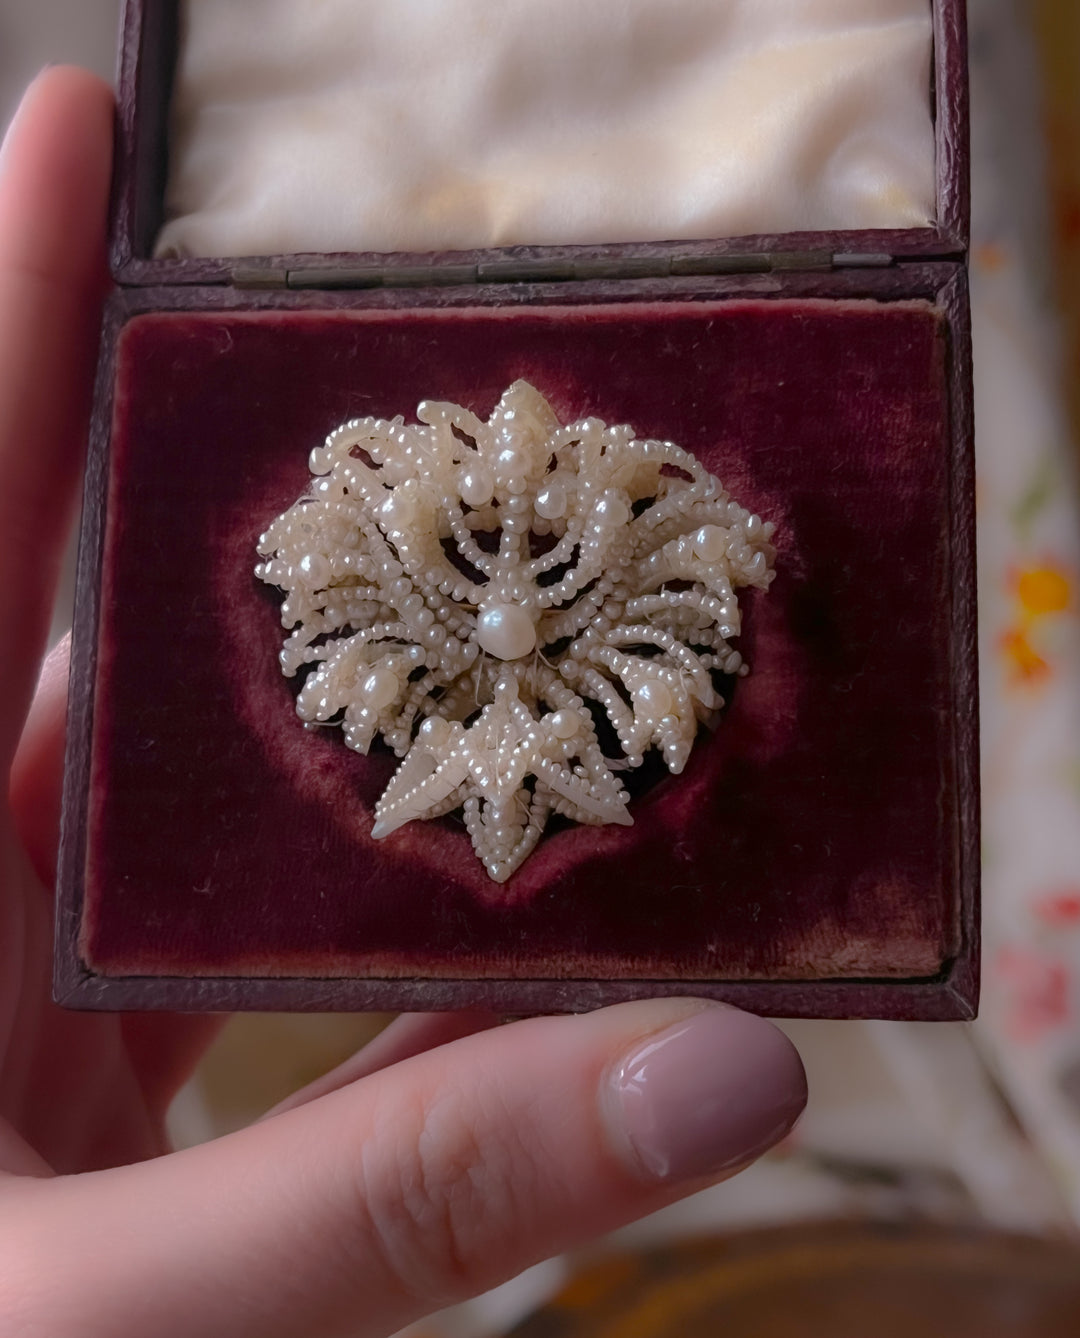 Rare Pearl Weddingwork Brooch in the Original Box c. 1830